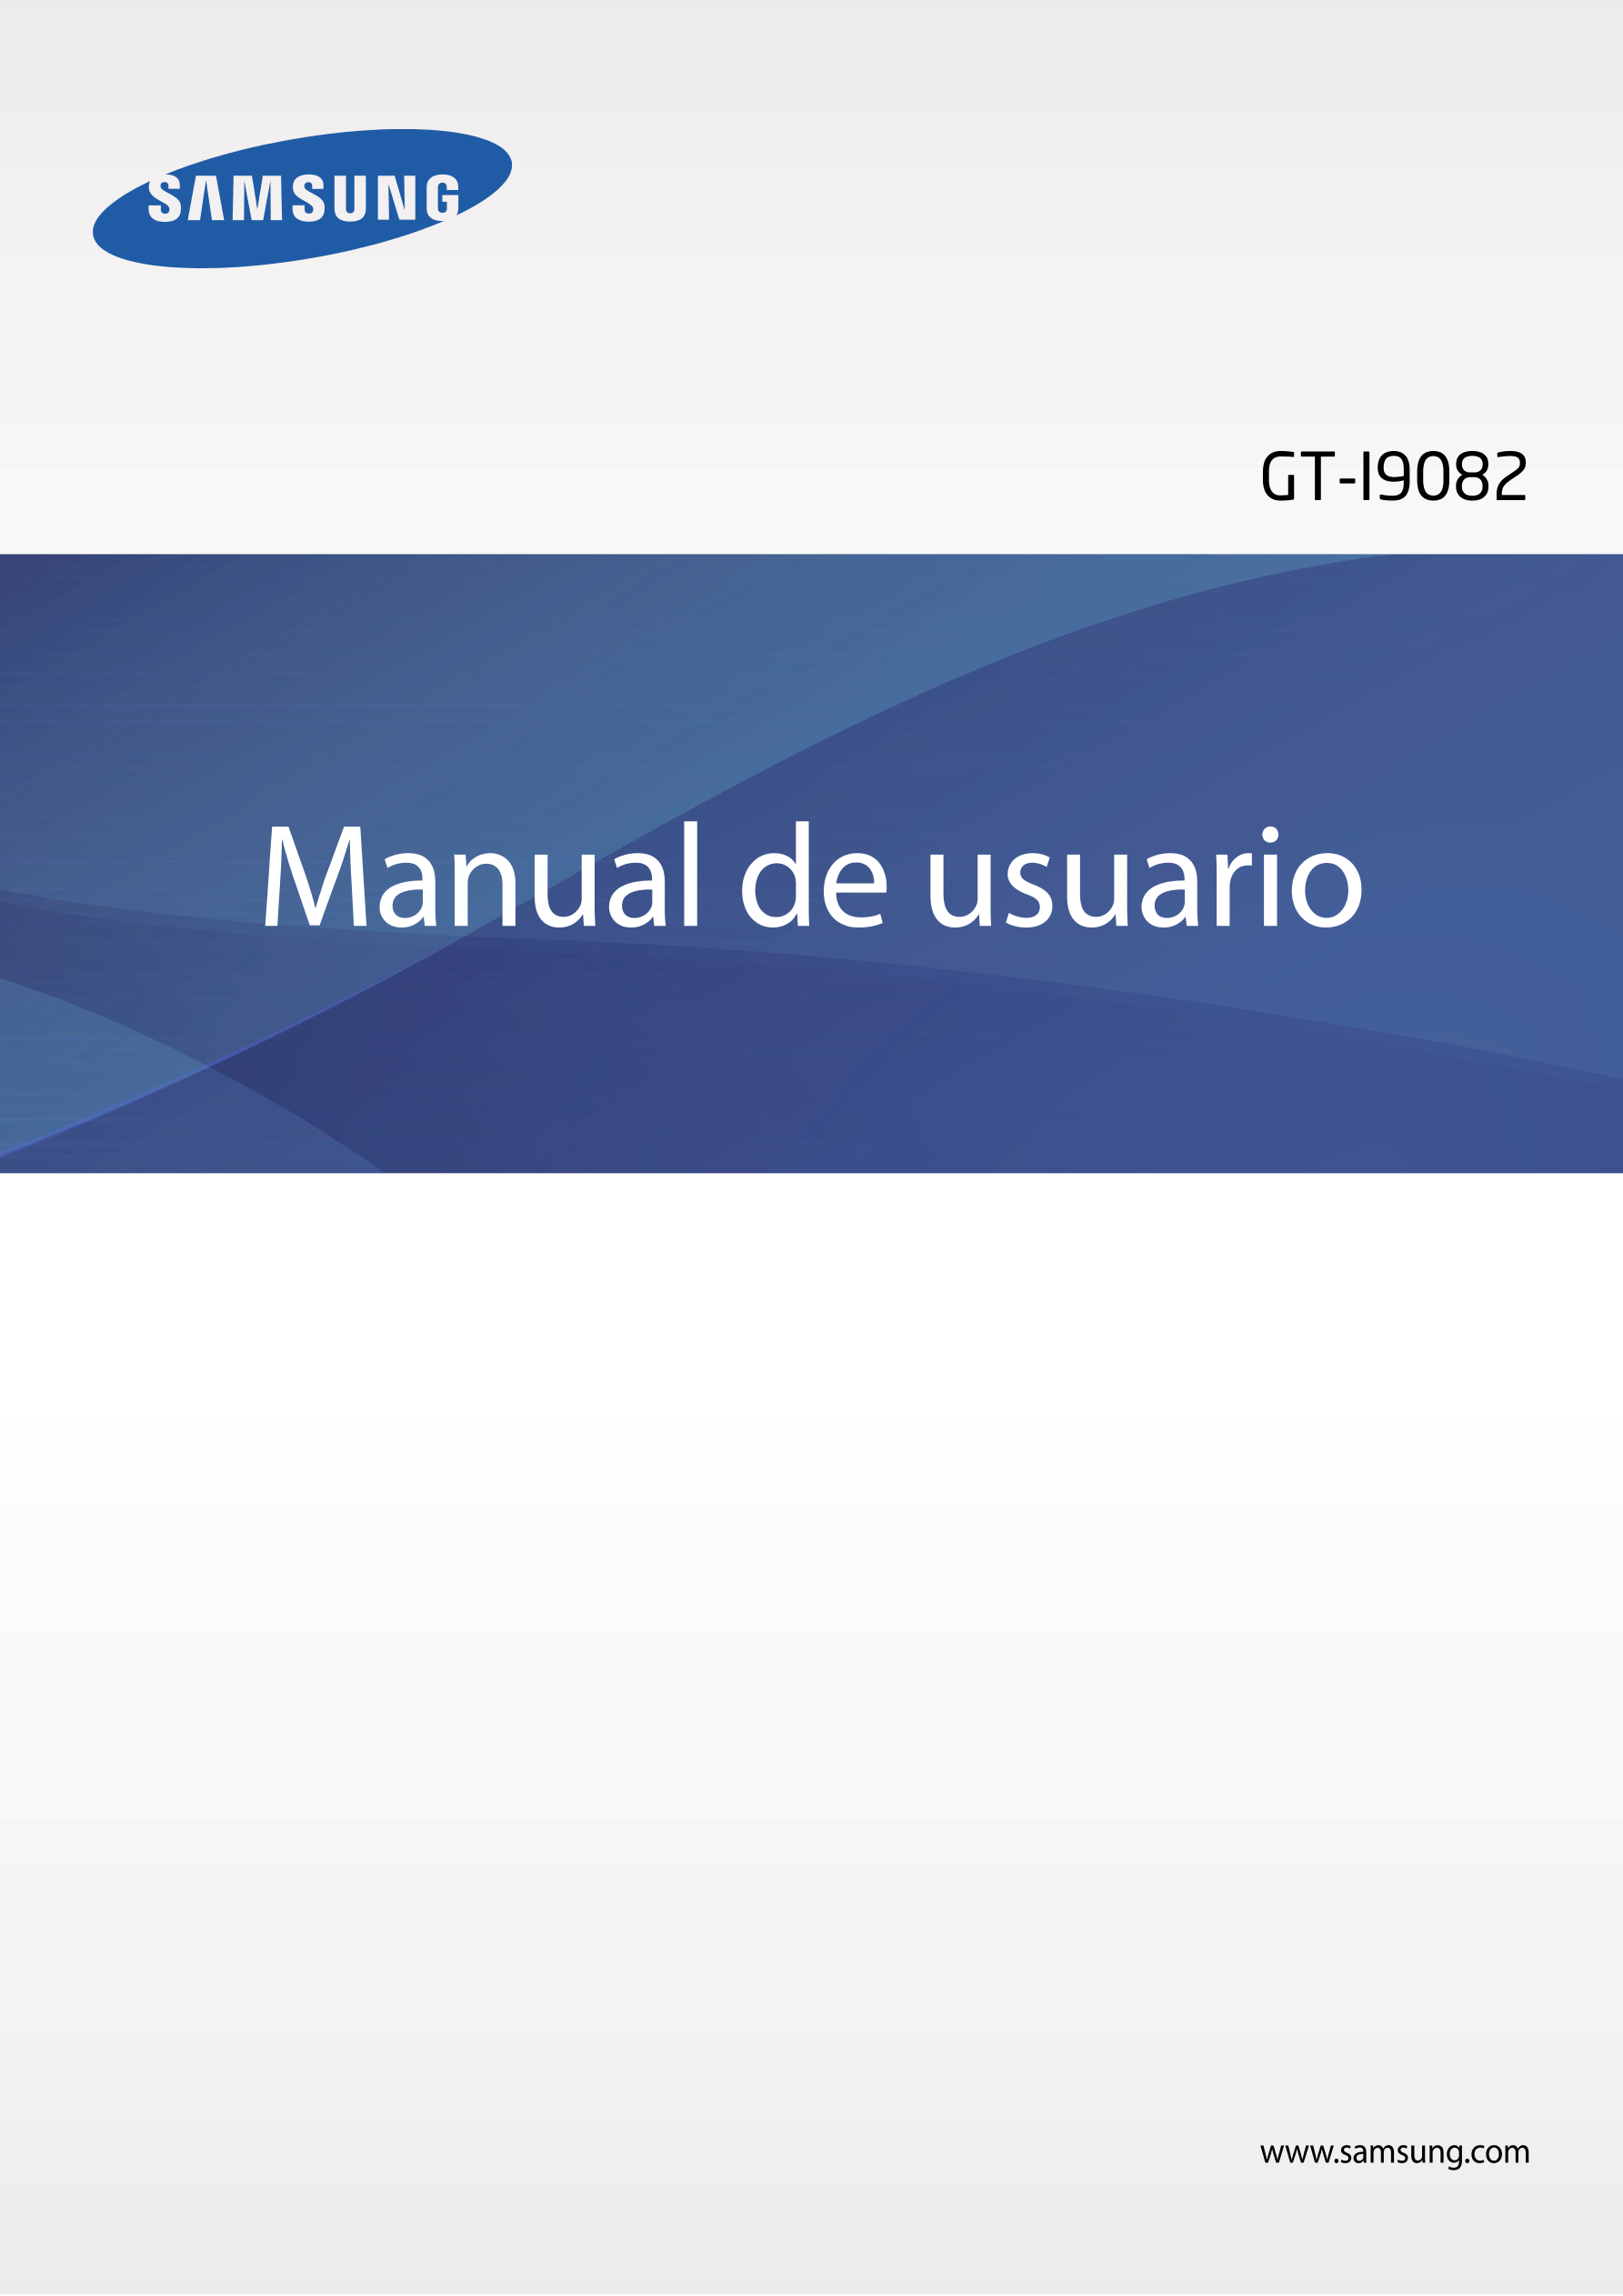 GT-I9082
Manual de usuario
www.samsung.com